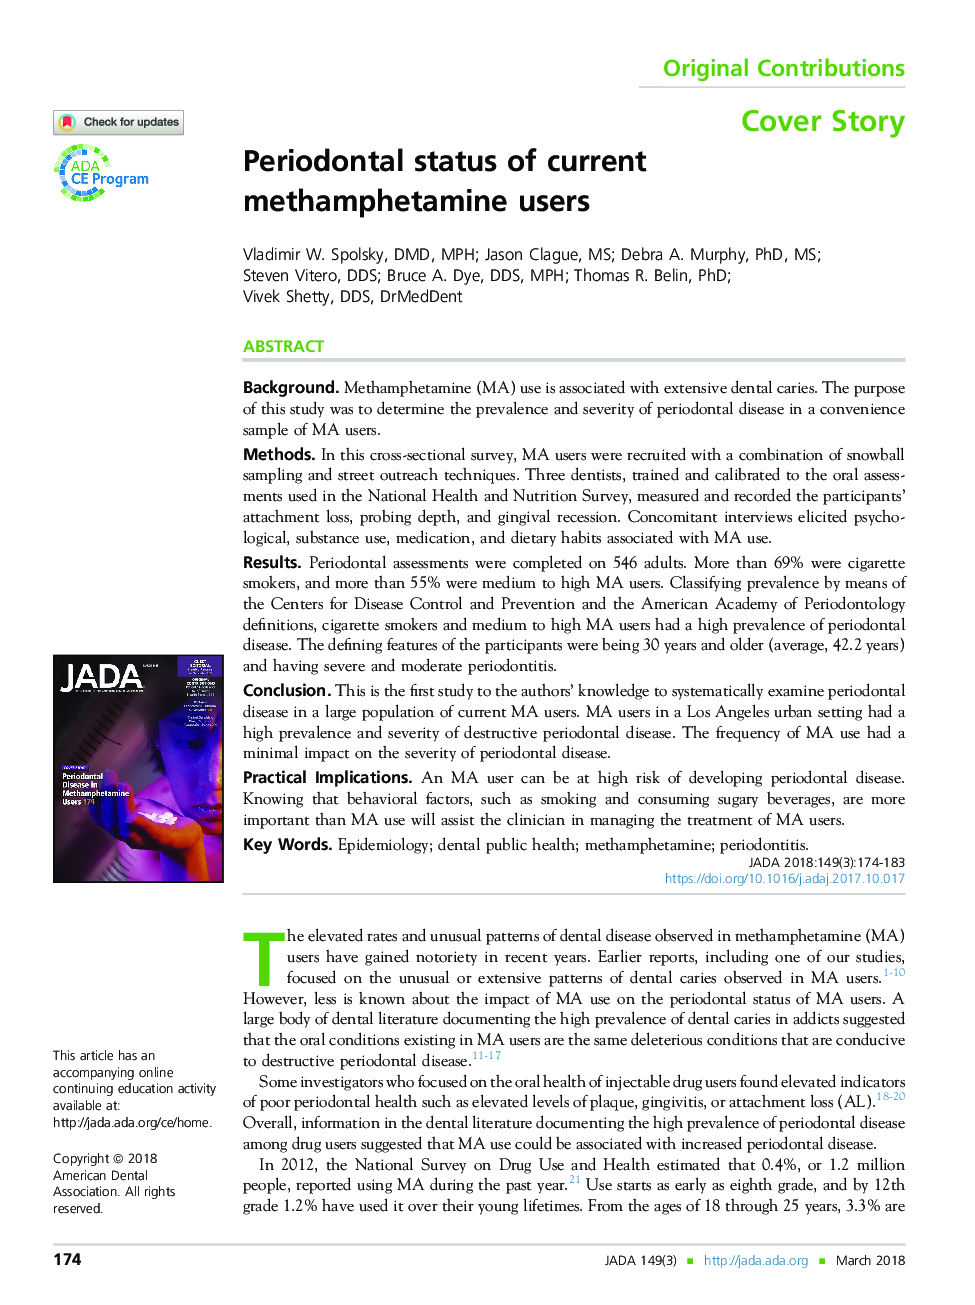 Periodontal status of current methamphetamine users